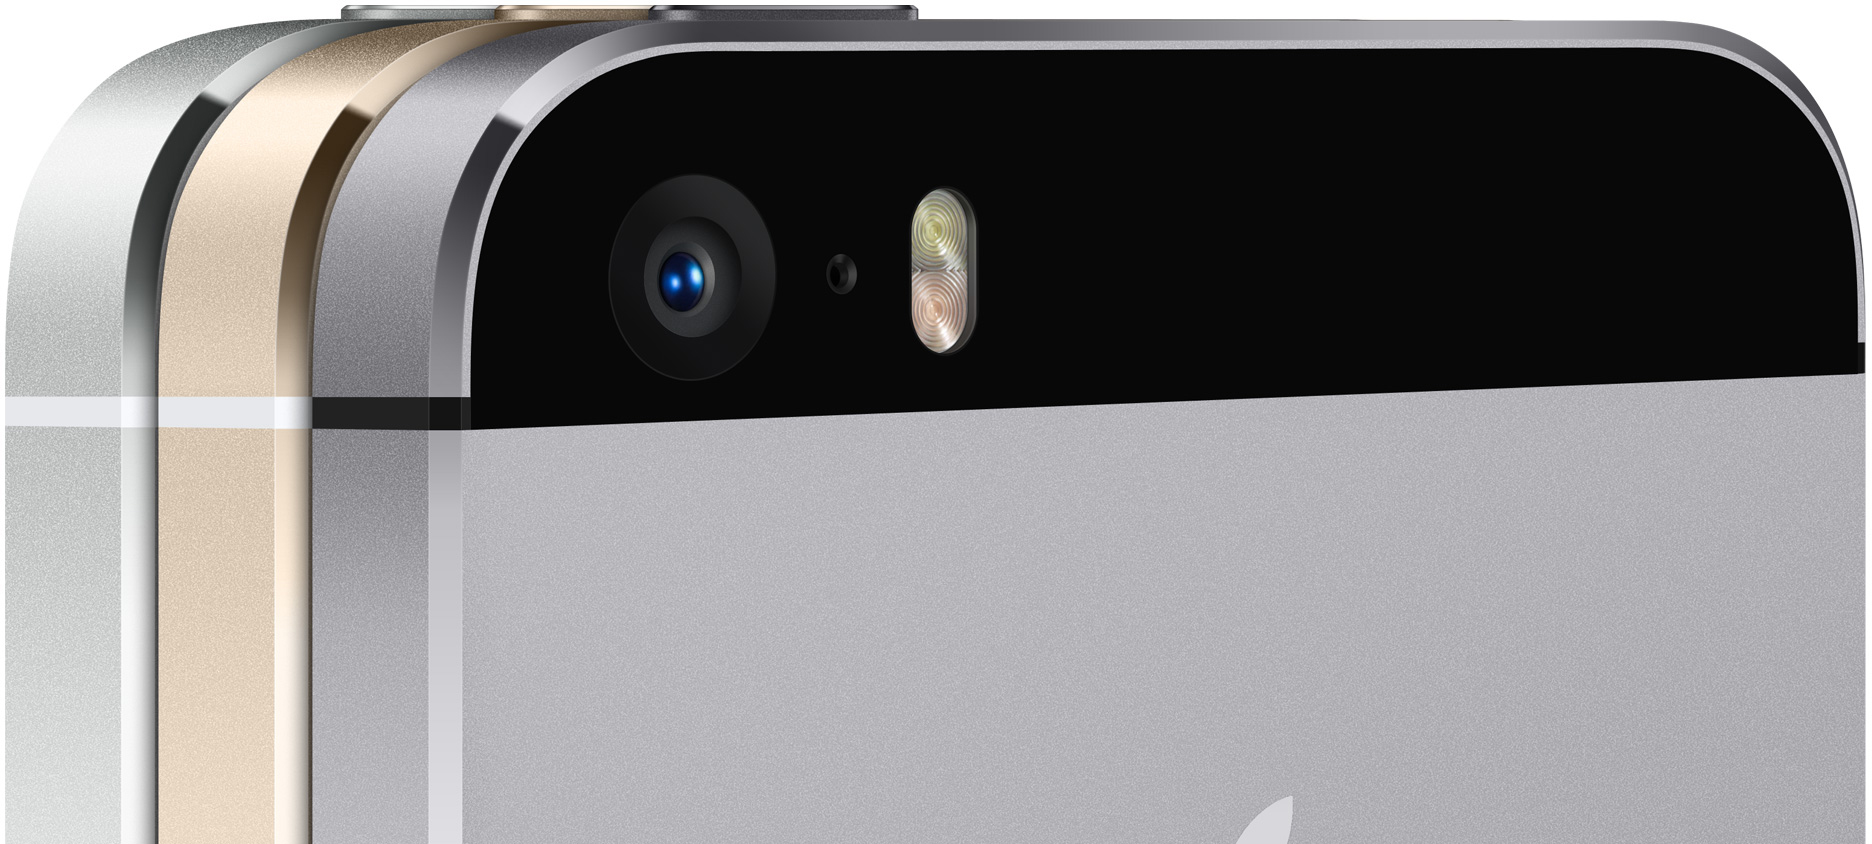 Câmera iSight e flash LED duplo do iPhone 5s